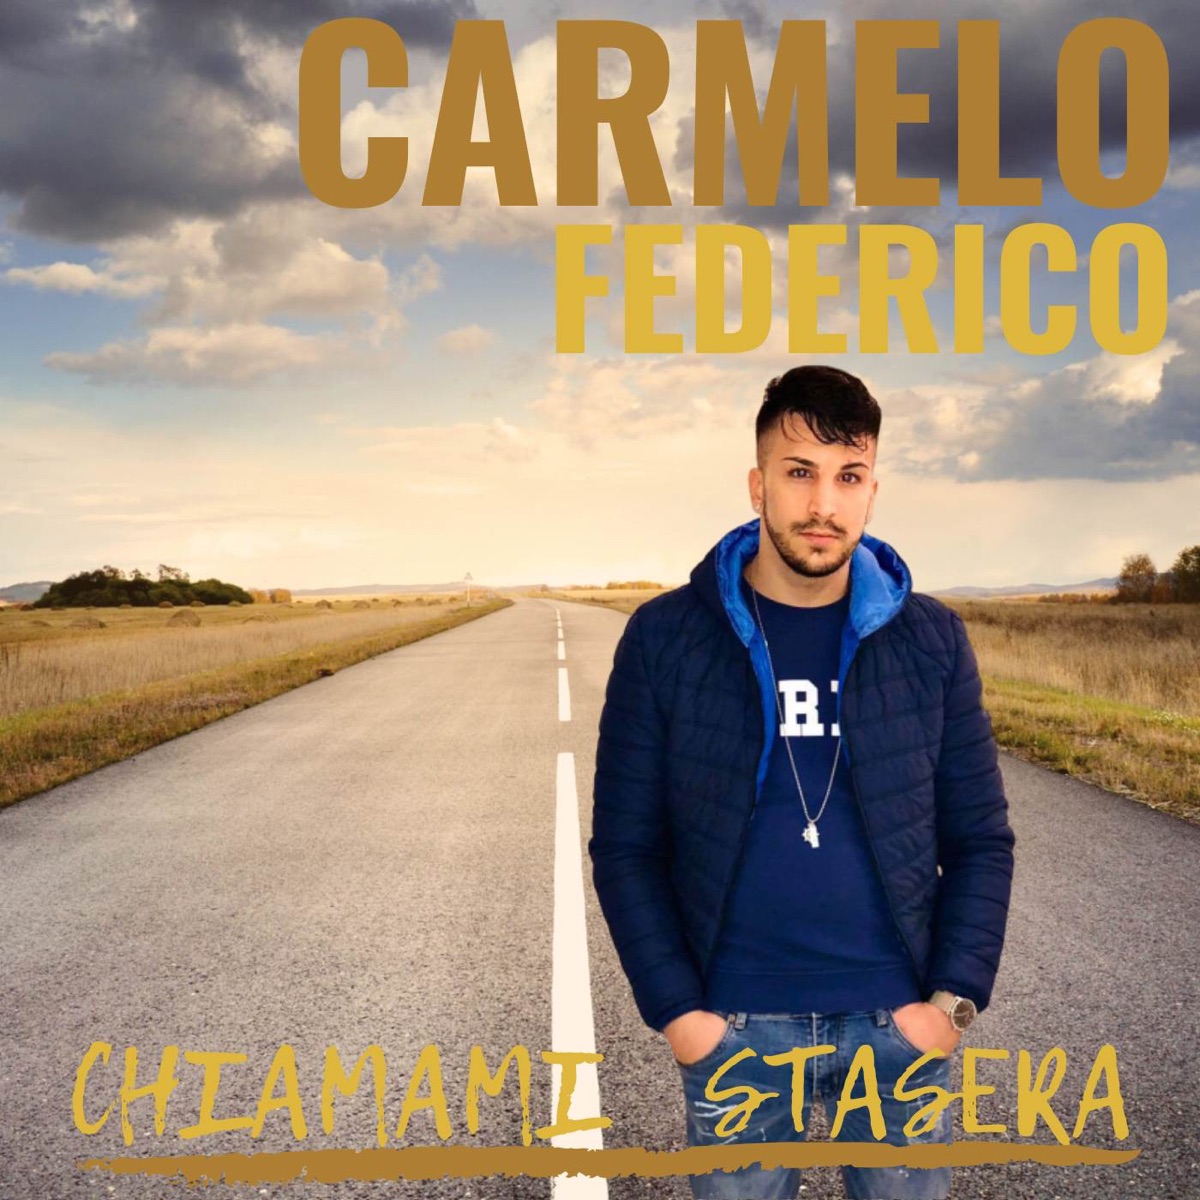 O calippo te piace - Single by Carmelo Federico on Apple Music